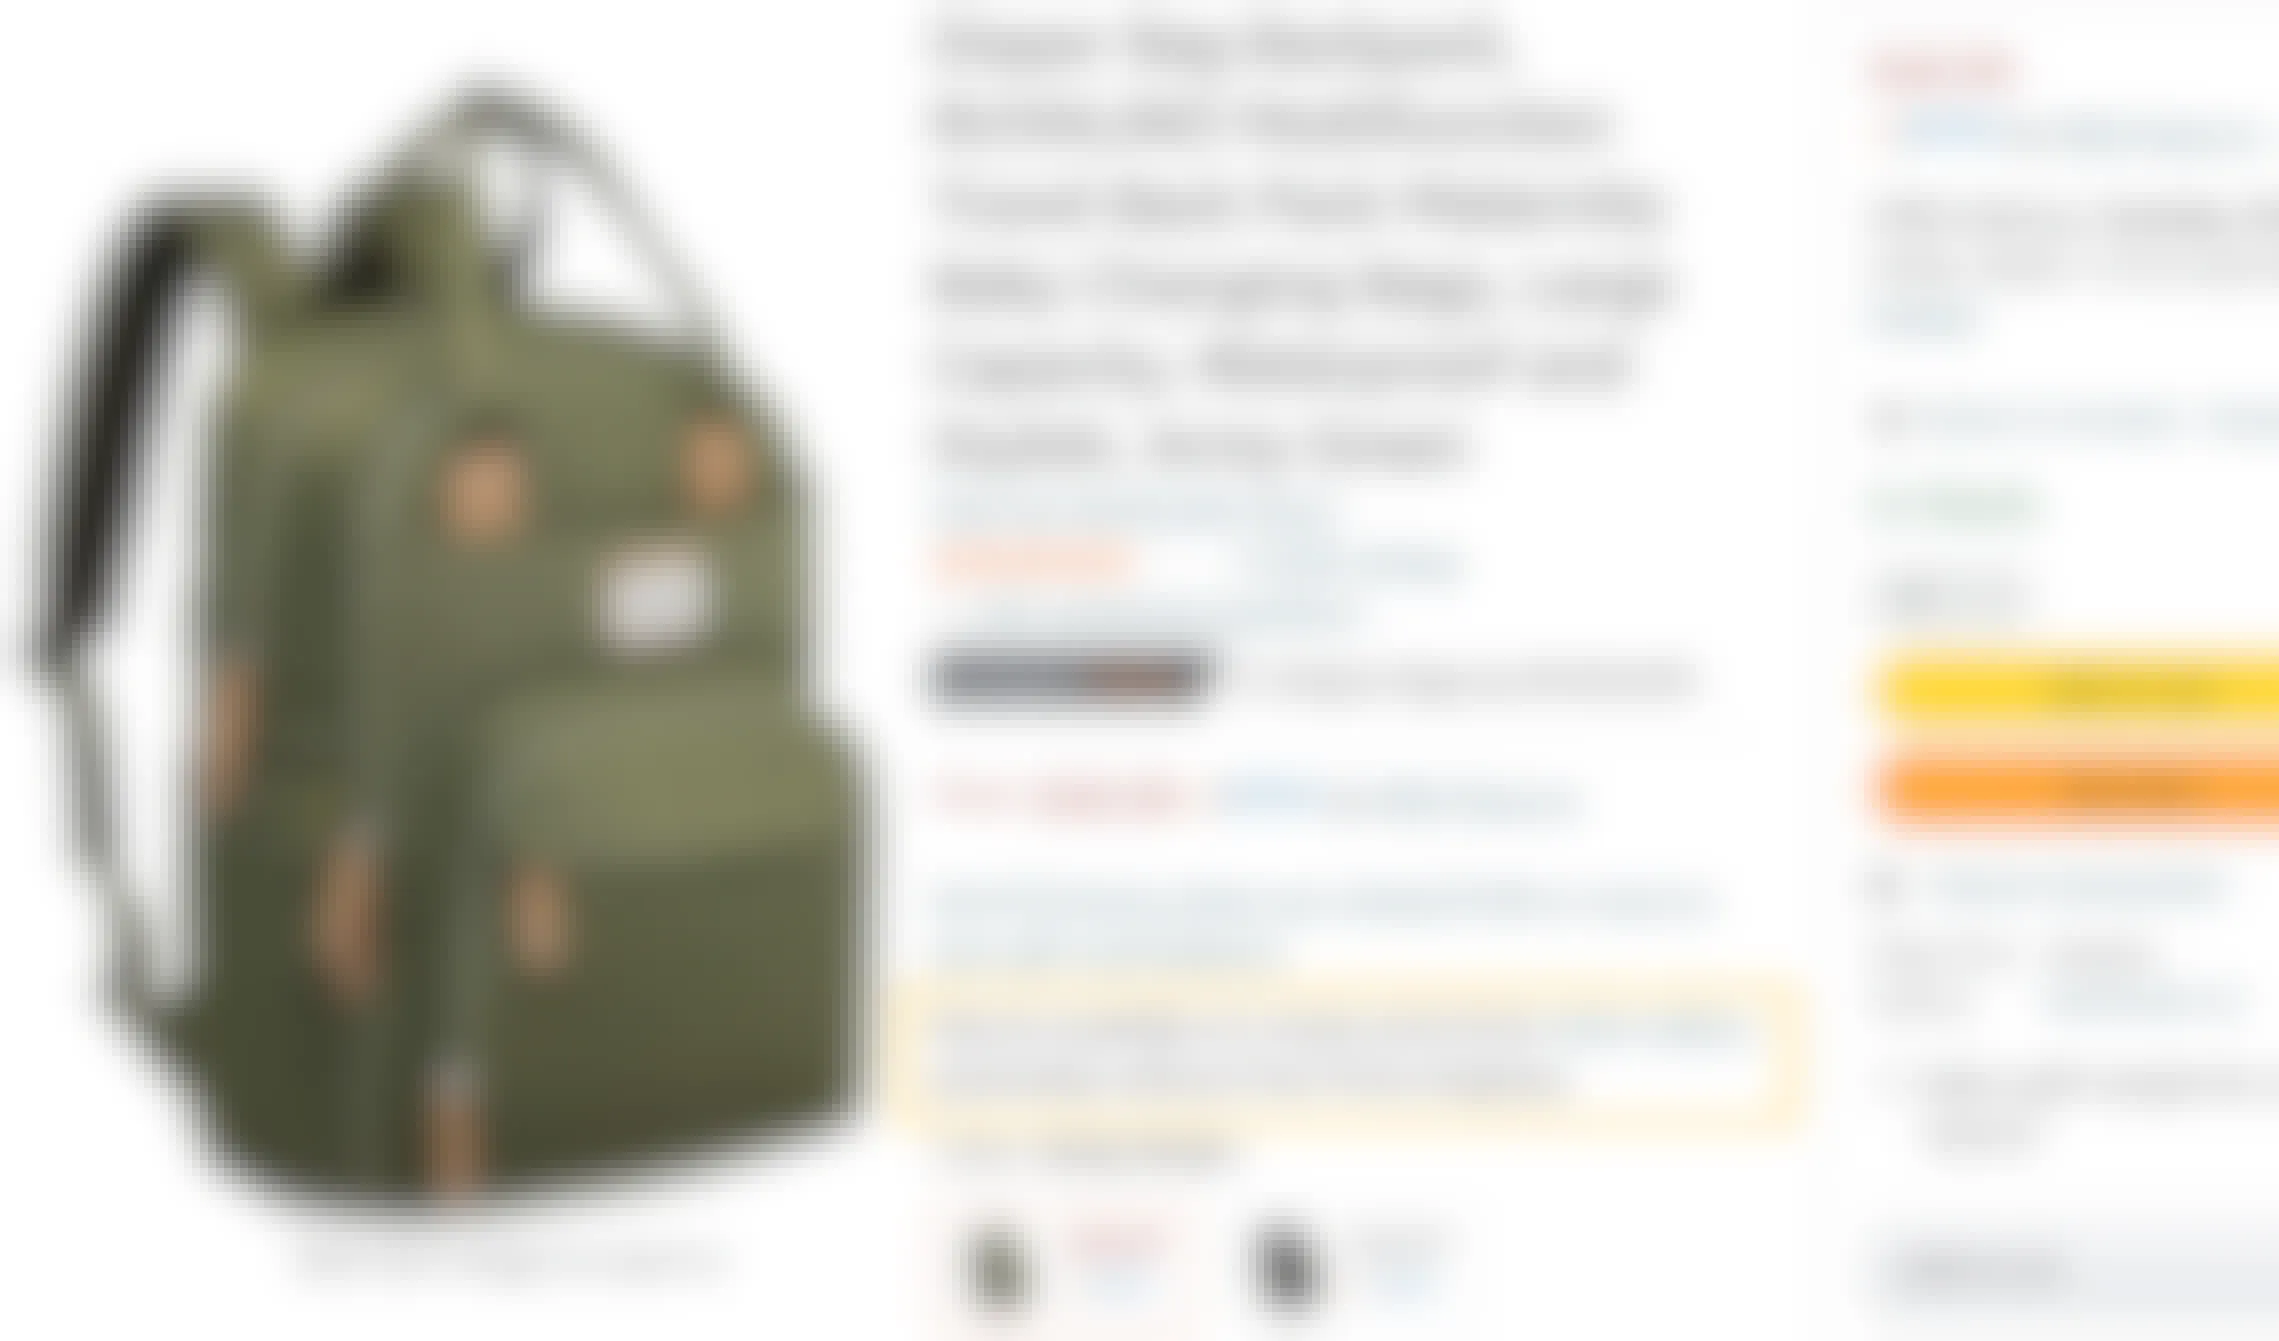 A diaper bag screenshot on Amazon